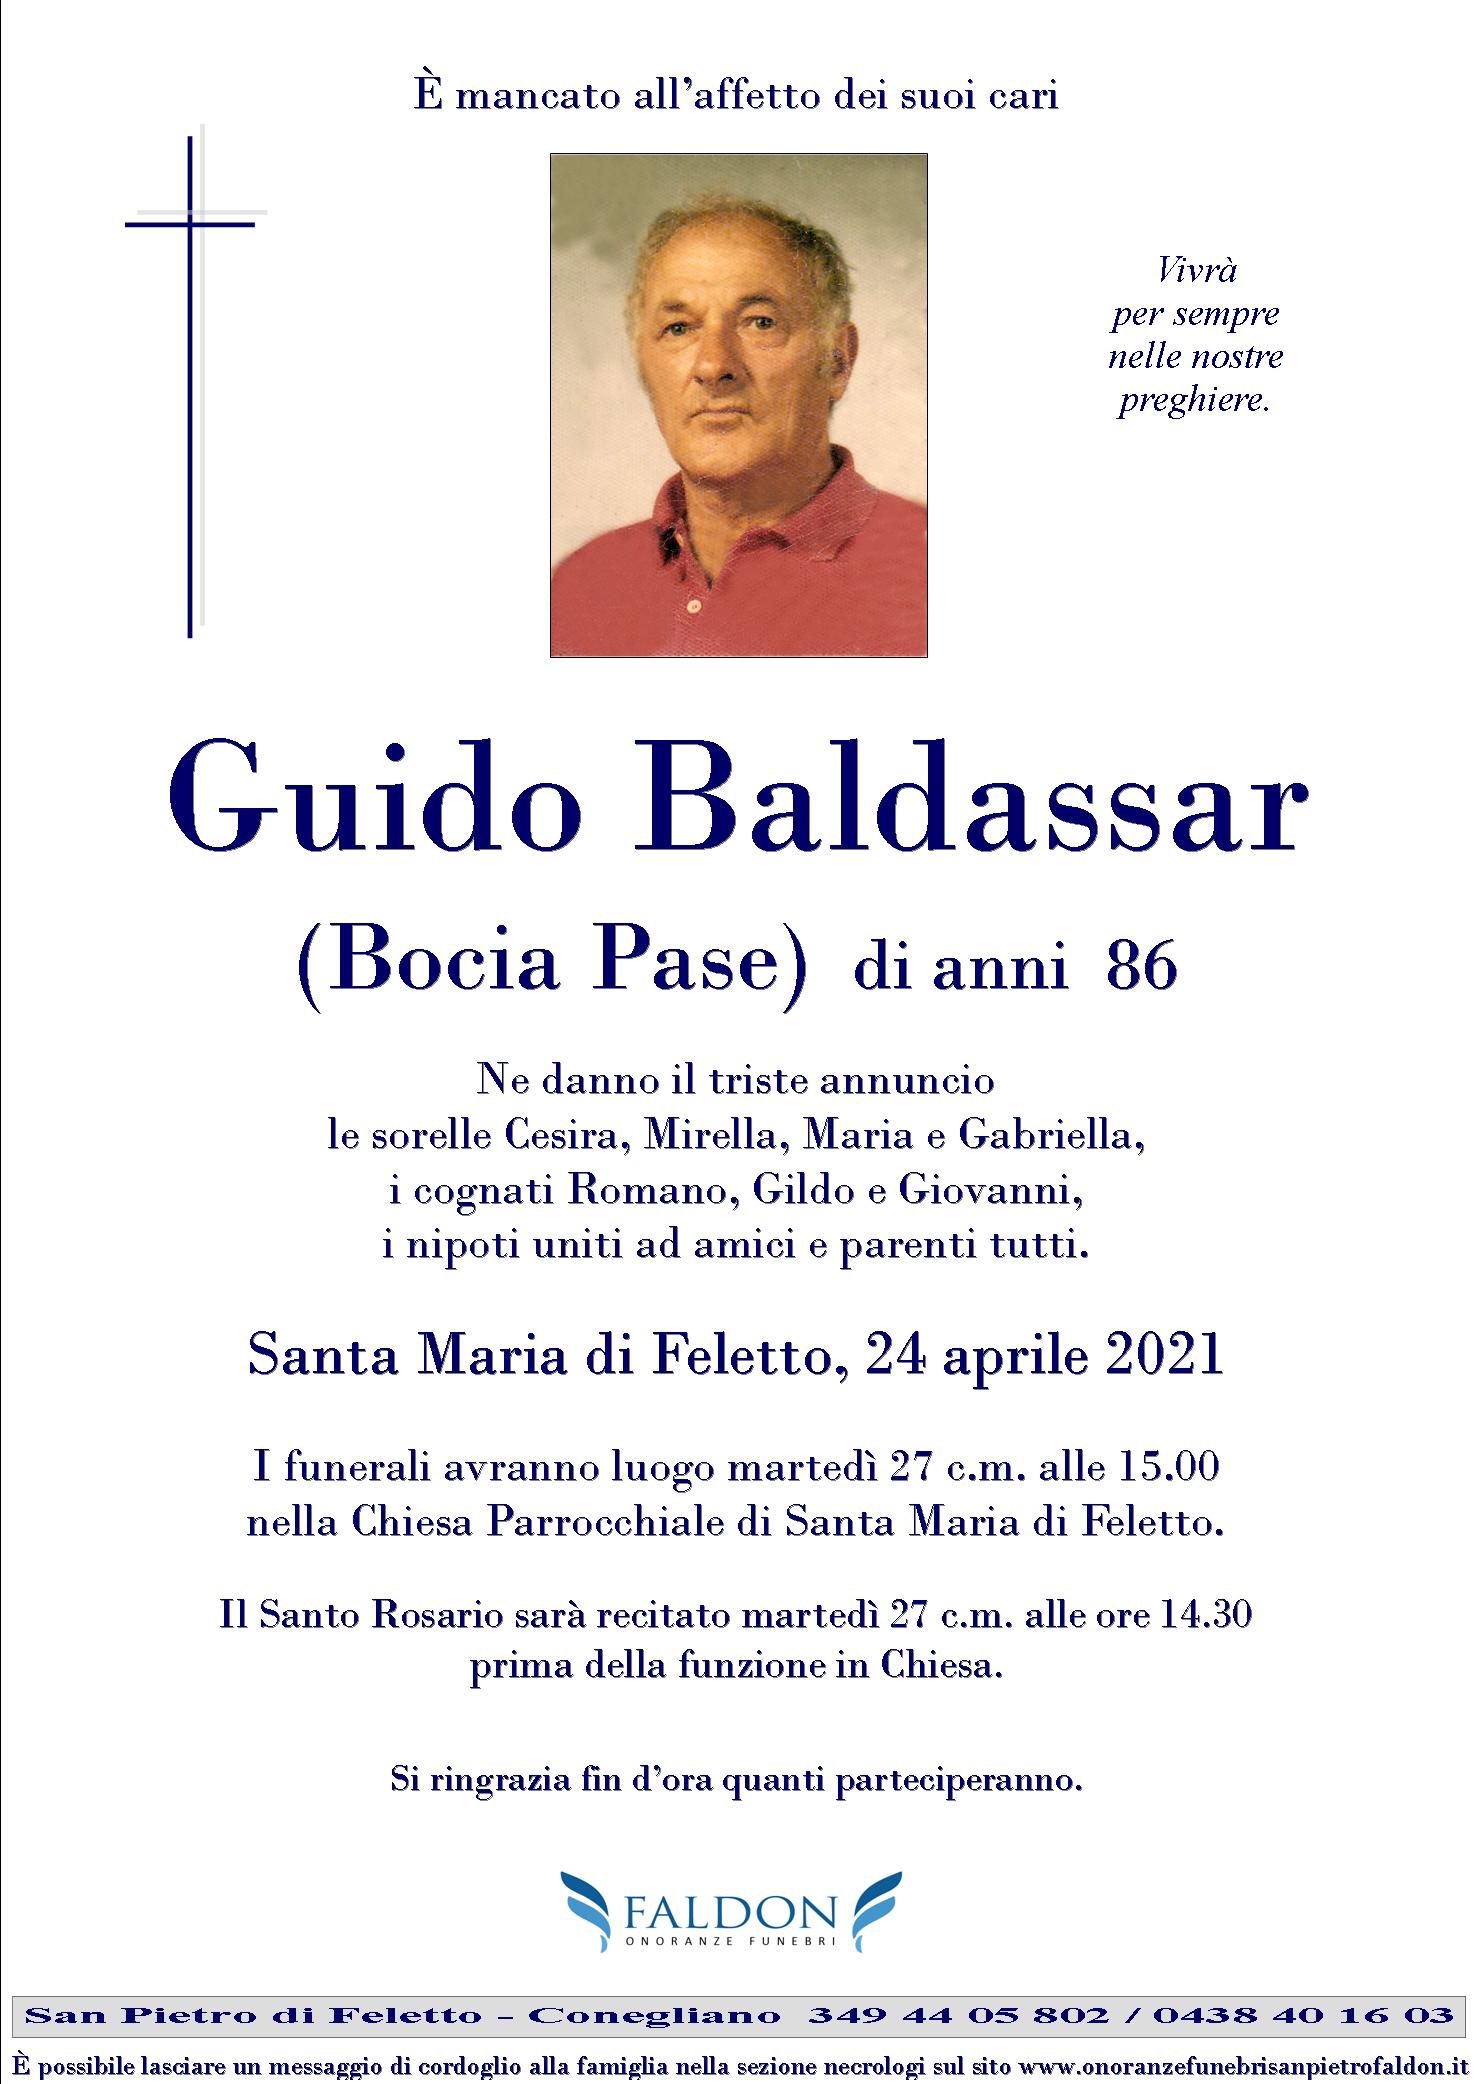 Guido Baldassar